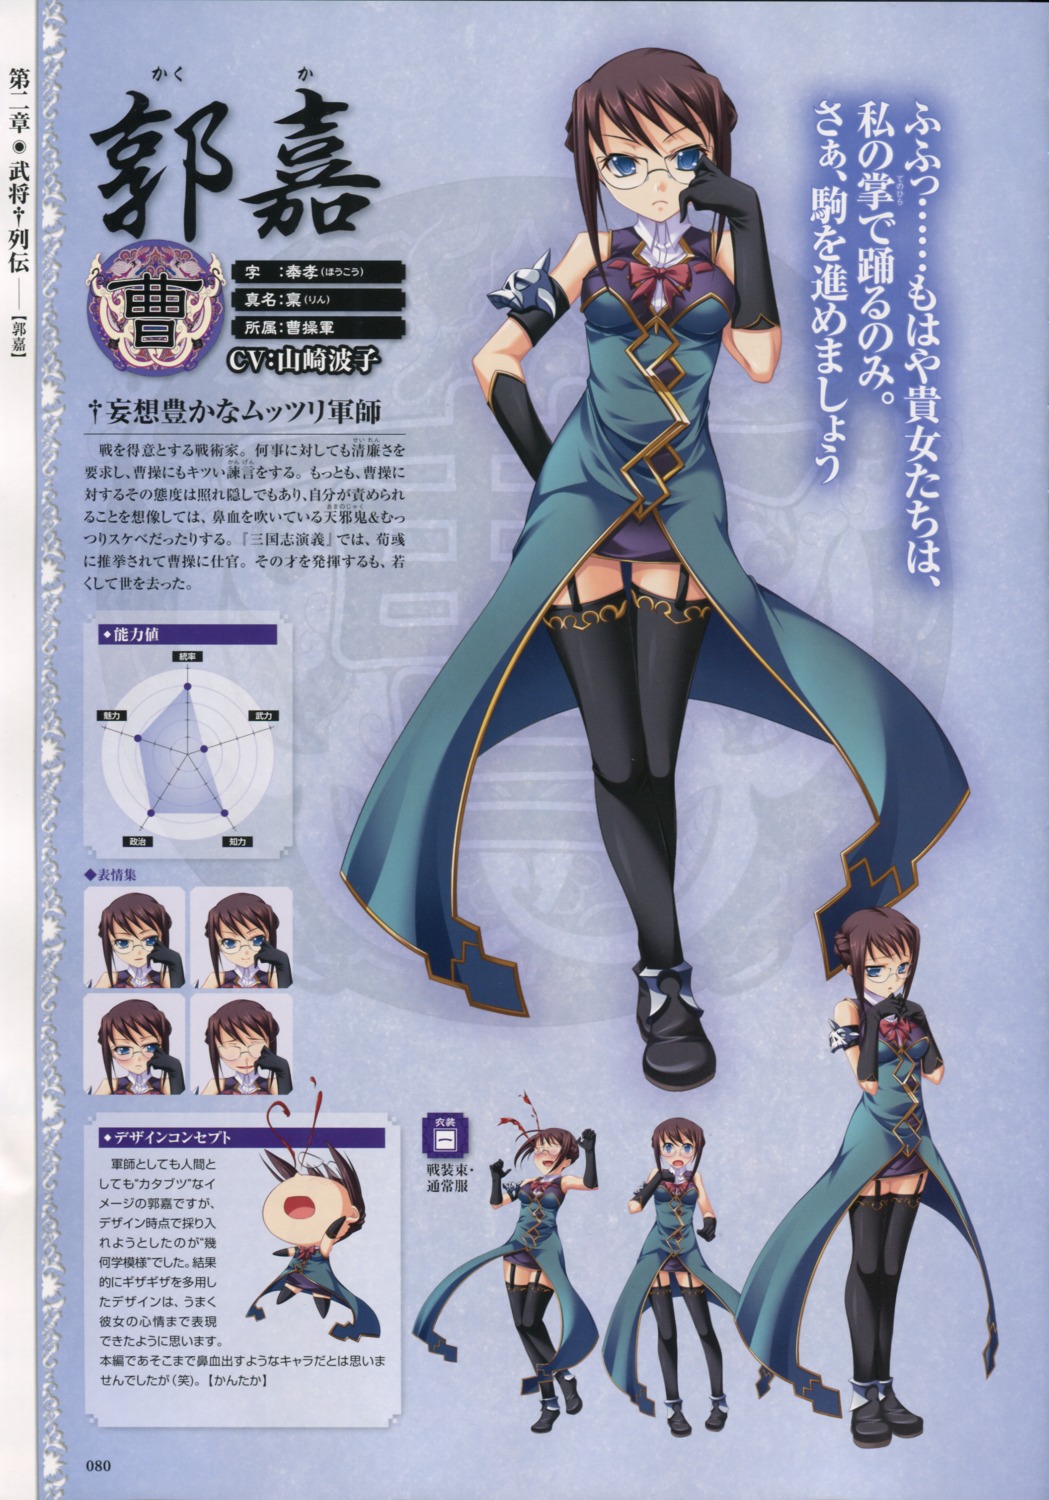 baseson character_design chibi expression kakuka koihime_musou megane profile_page stockings thighhighs